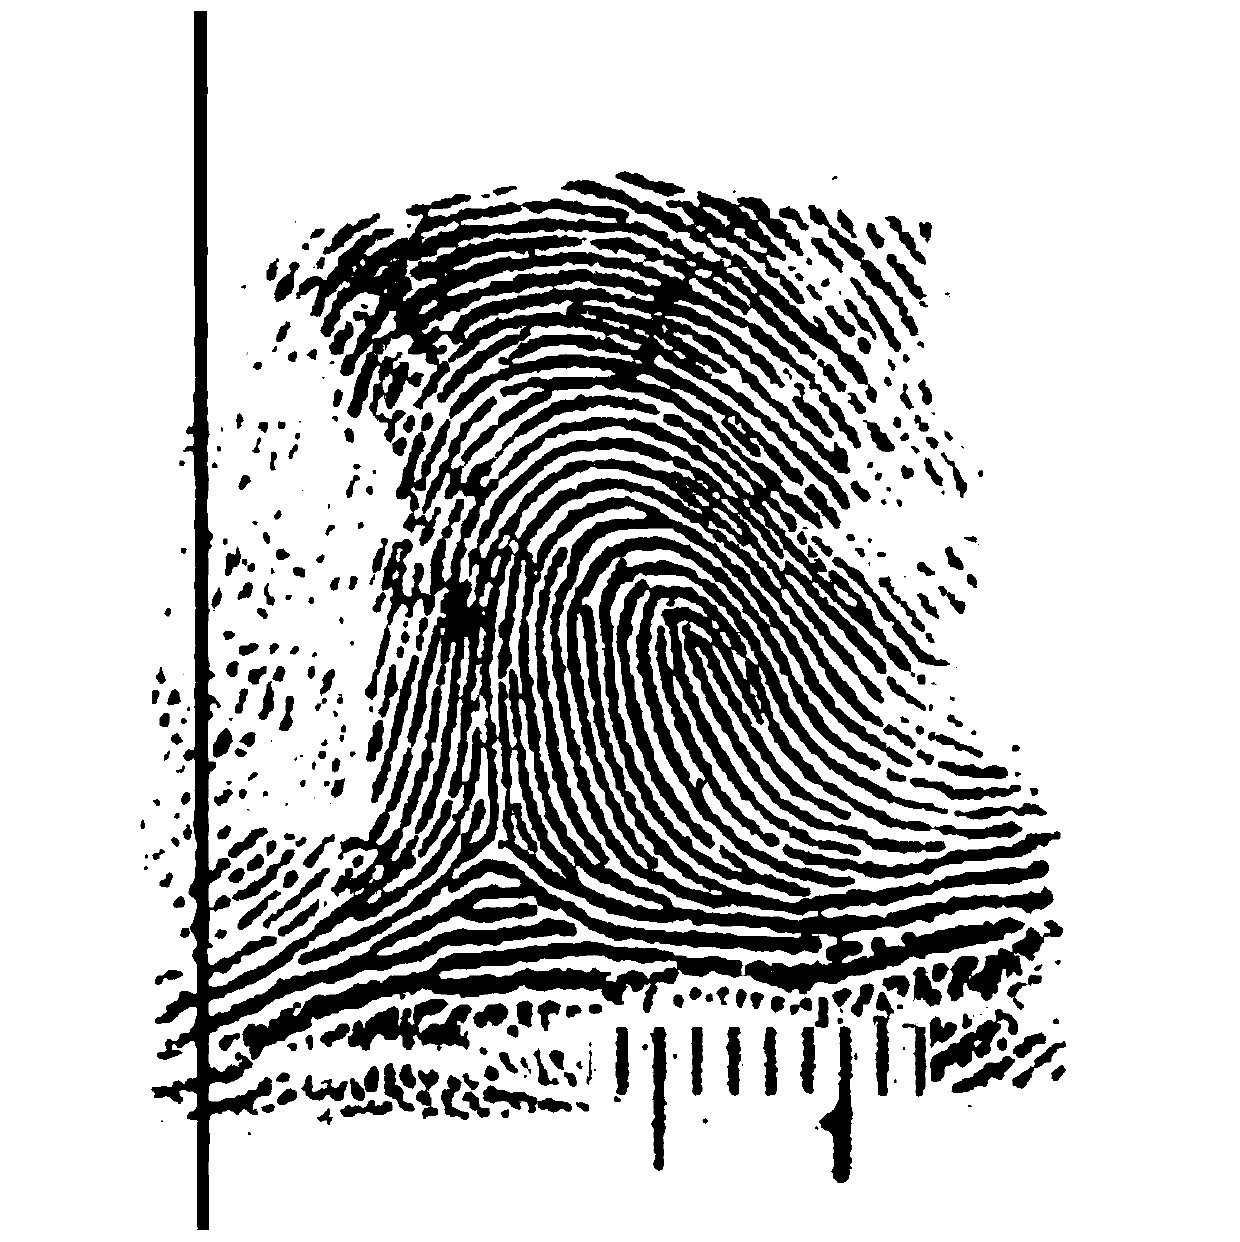 Method for quantitatively calculating fingerprint deformation